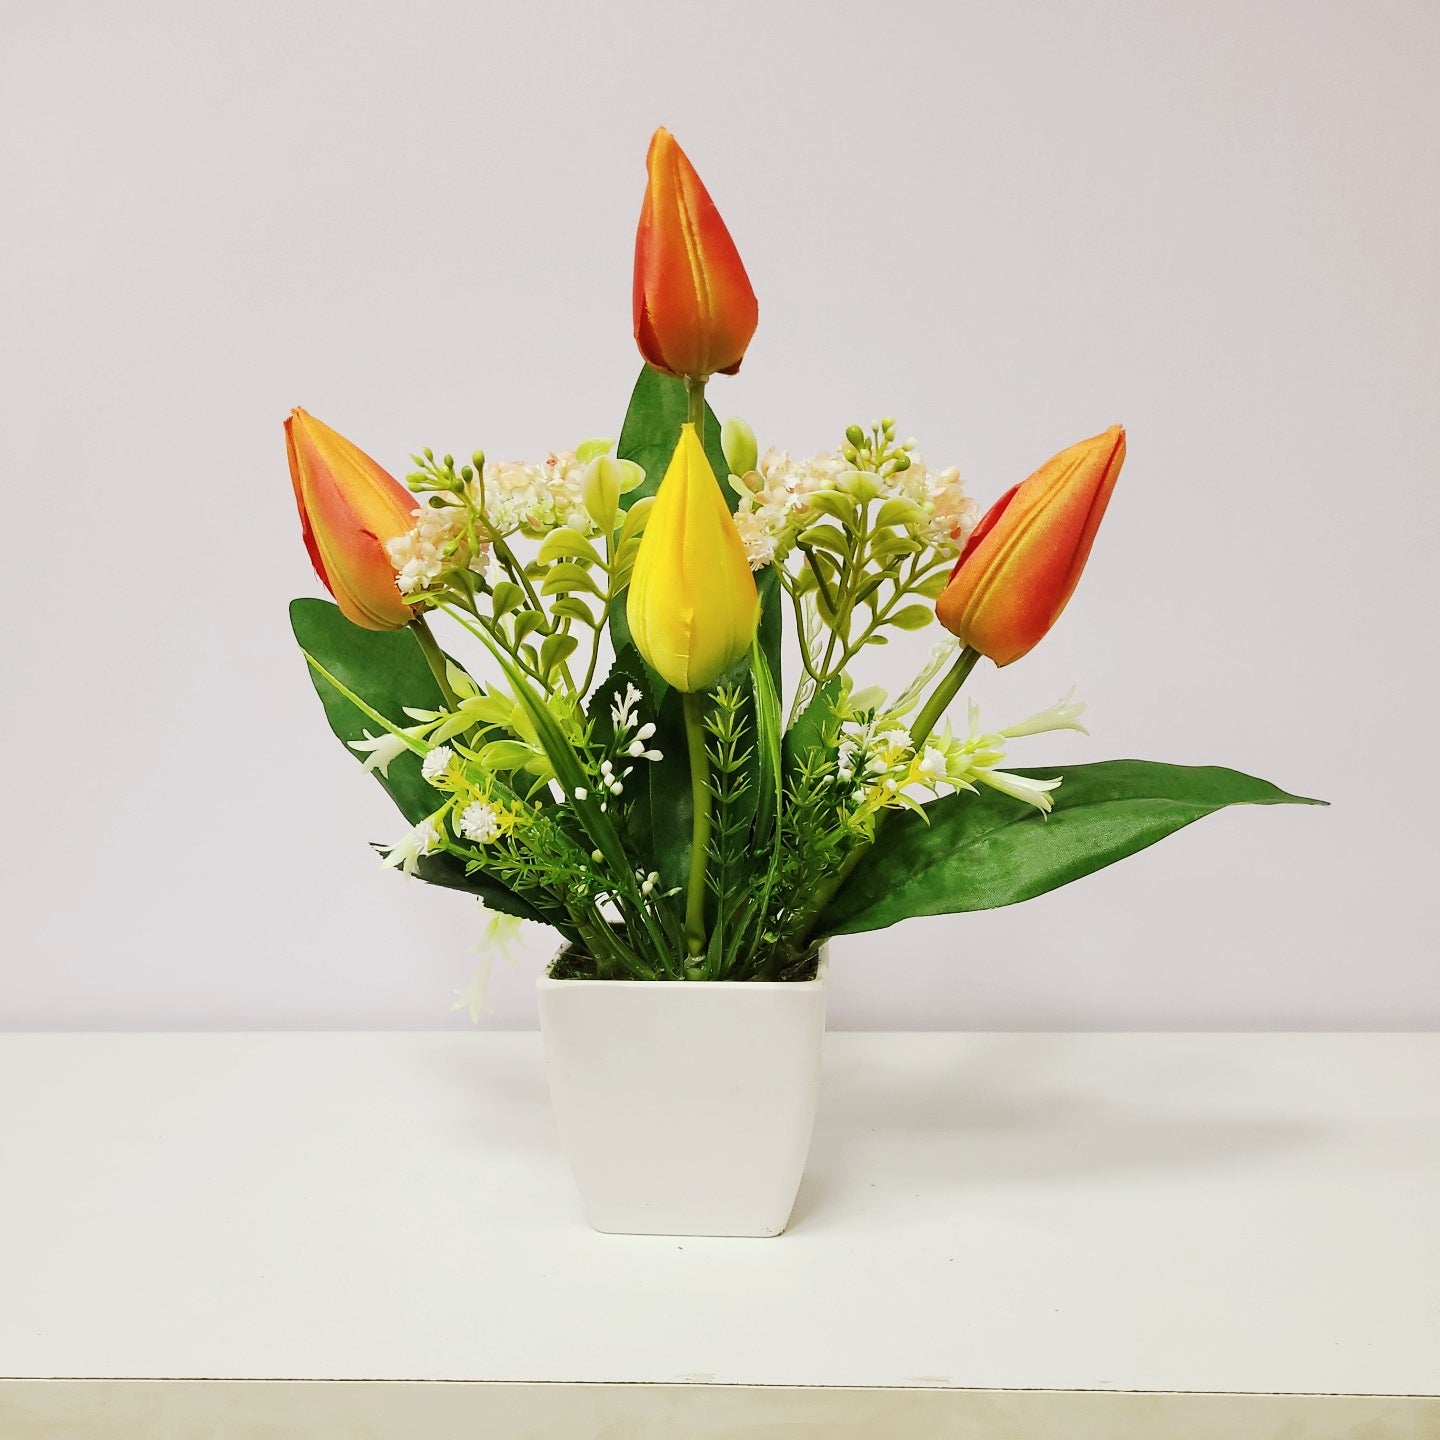 Artificial Tulip Flower Arrangements